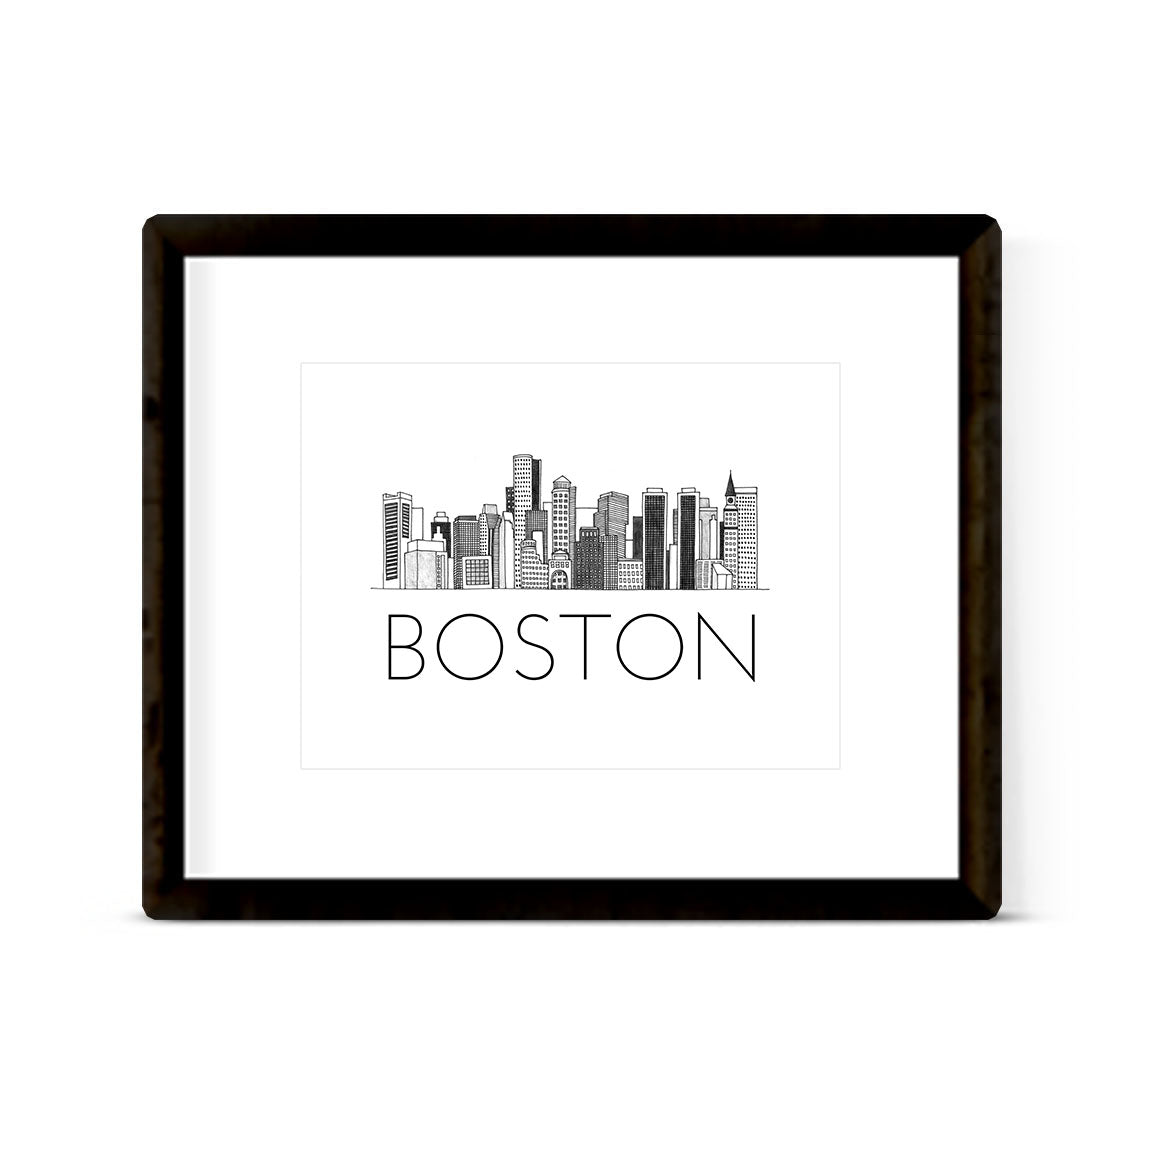 "BOSTON" Skyline